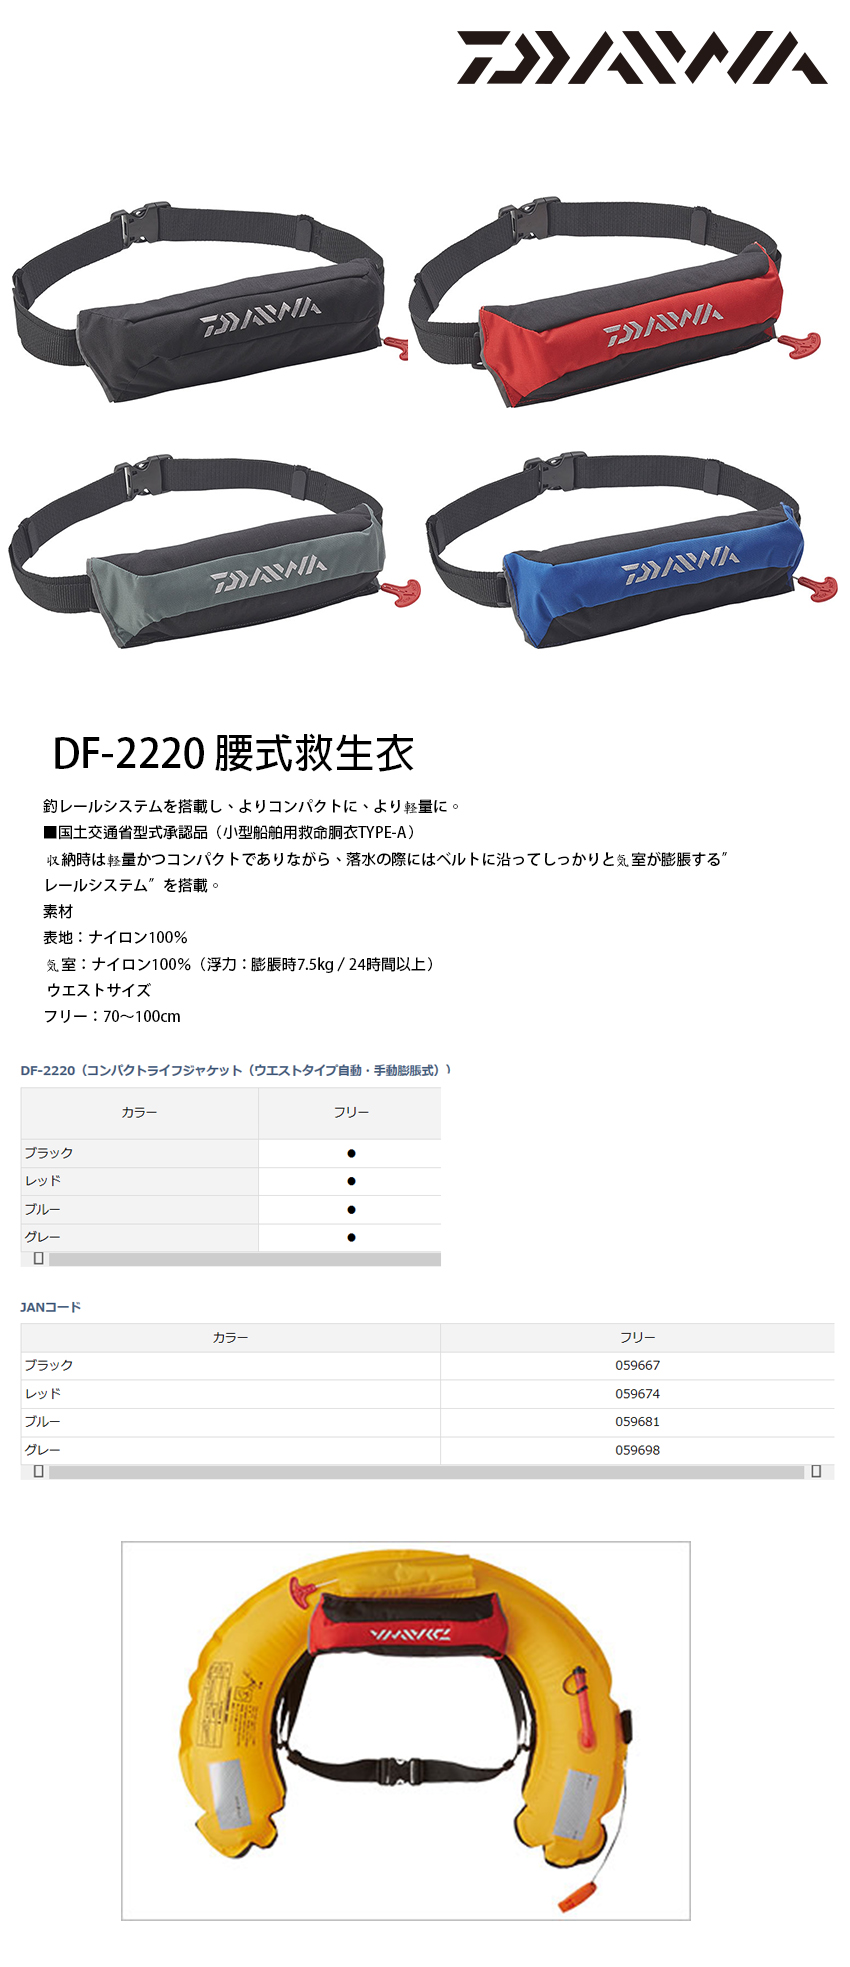 DAIWA DF-2220 [腰掛充氣救生衣] - 漁拓釣具官方線上購物平台